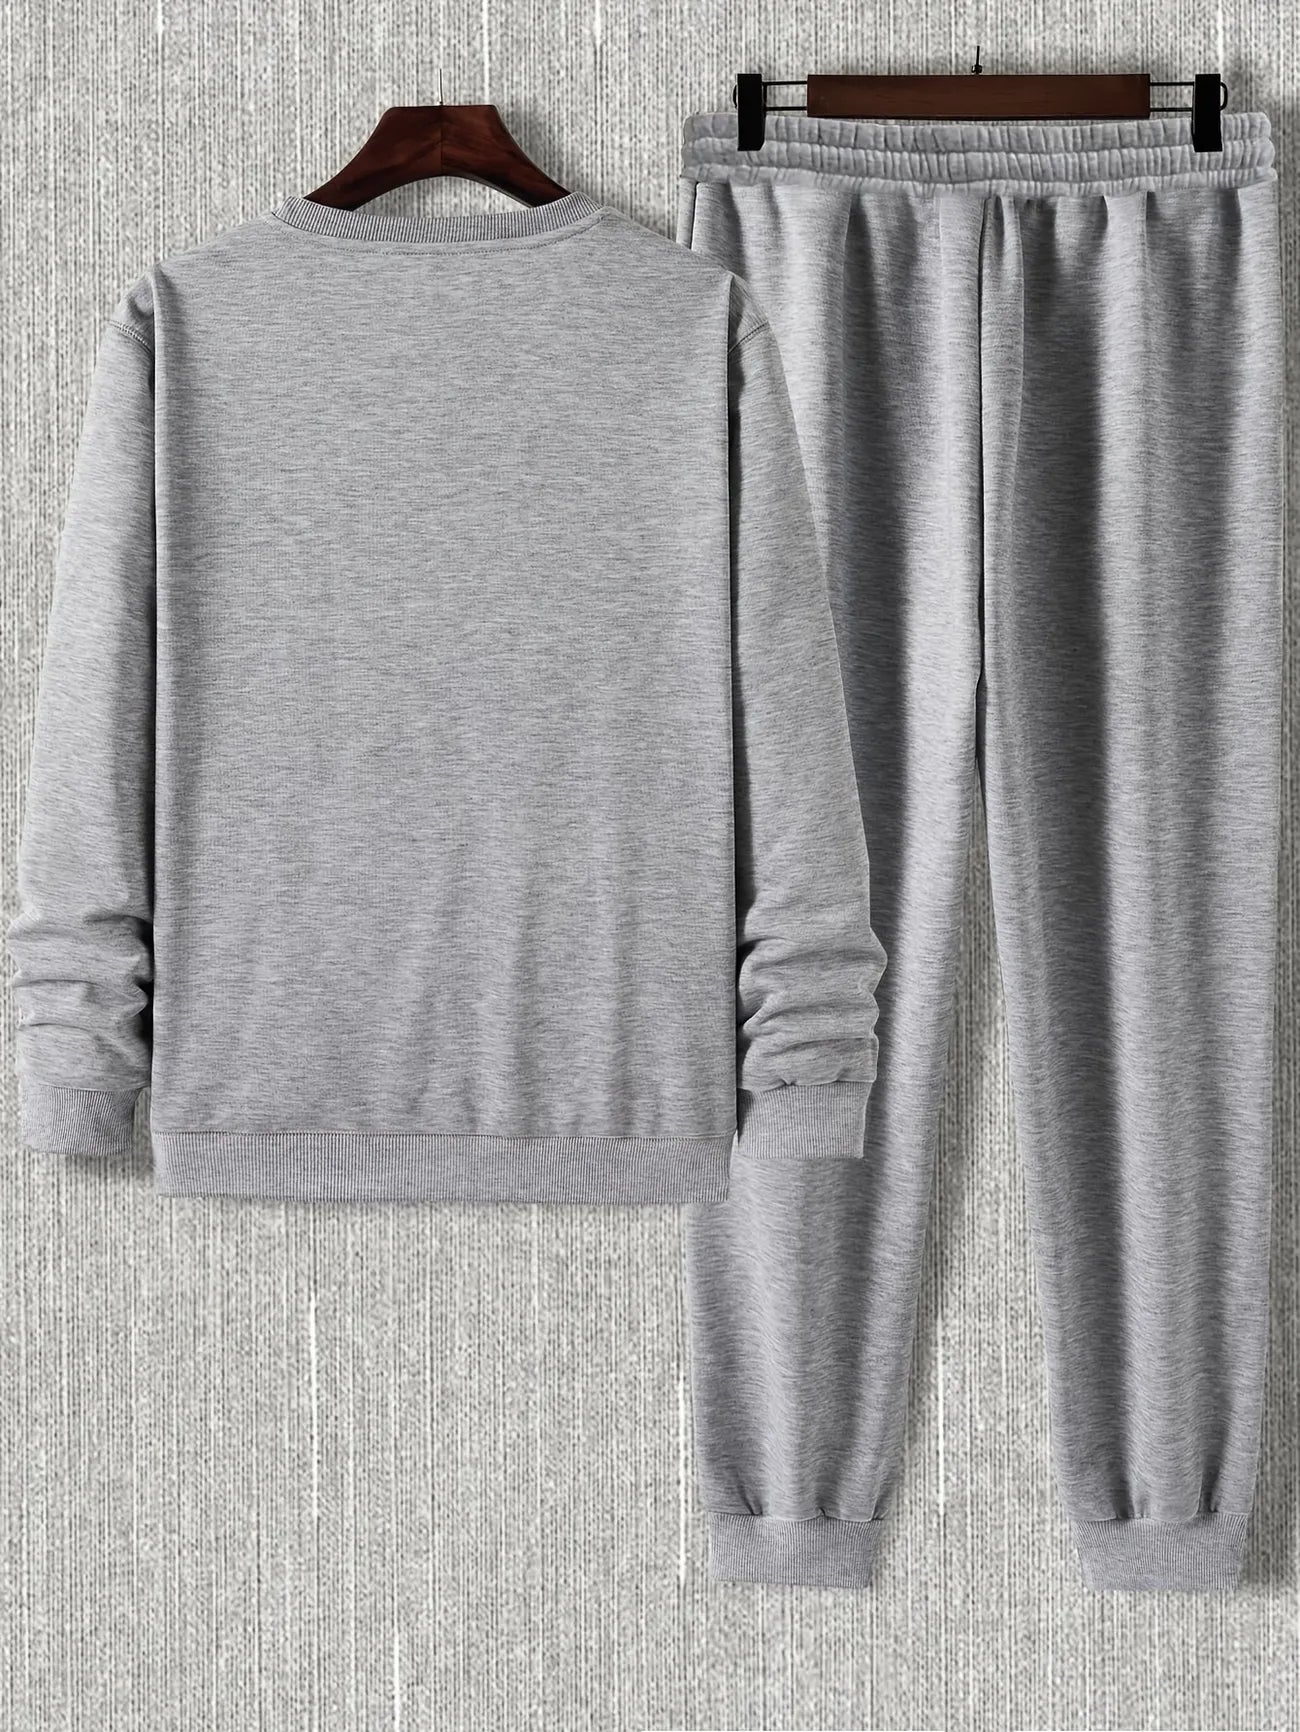 Mens Sweatshirt and Pants Set by Tee Tall - MSPSTT23 - Grey Grey